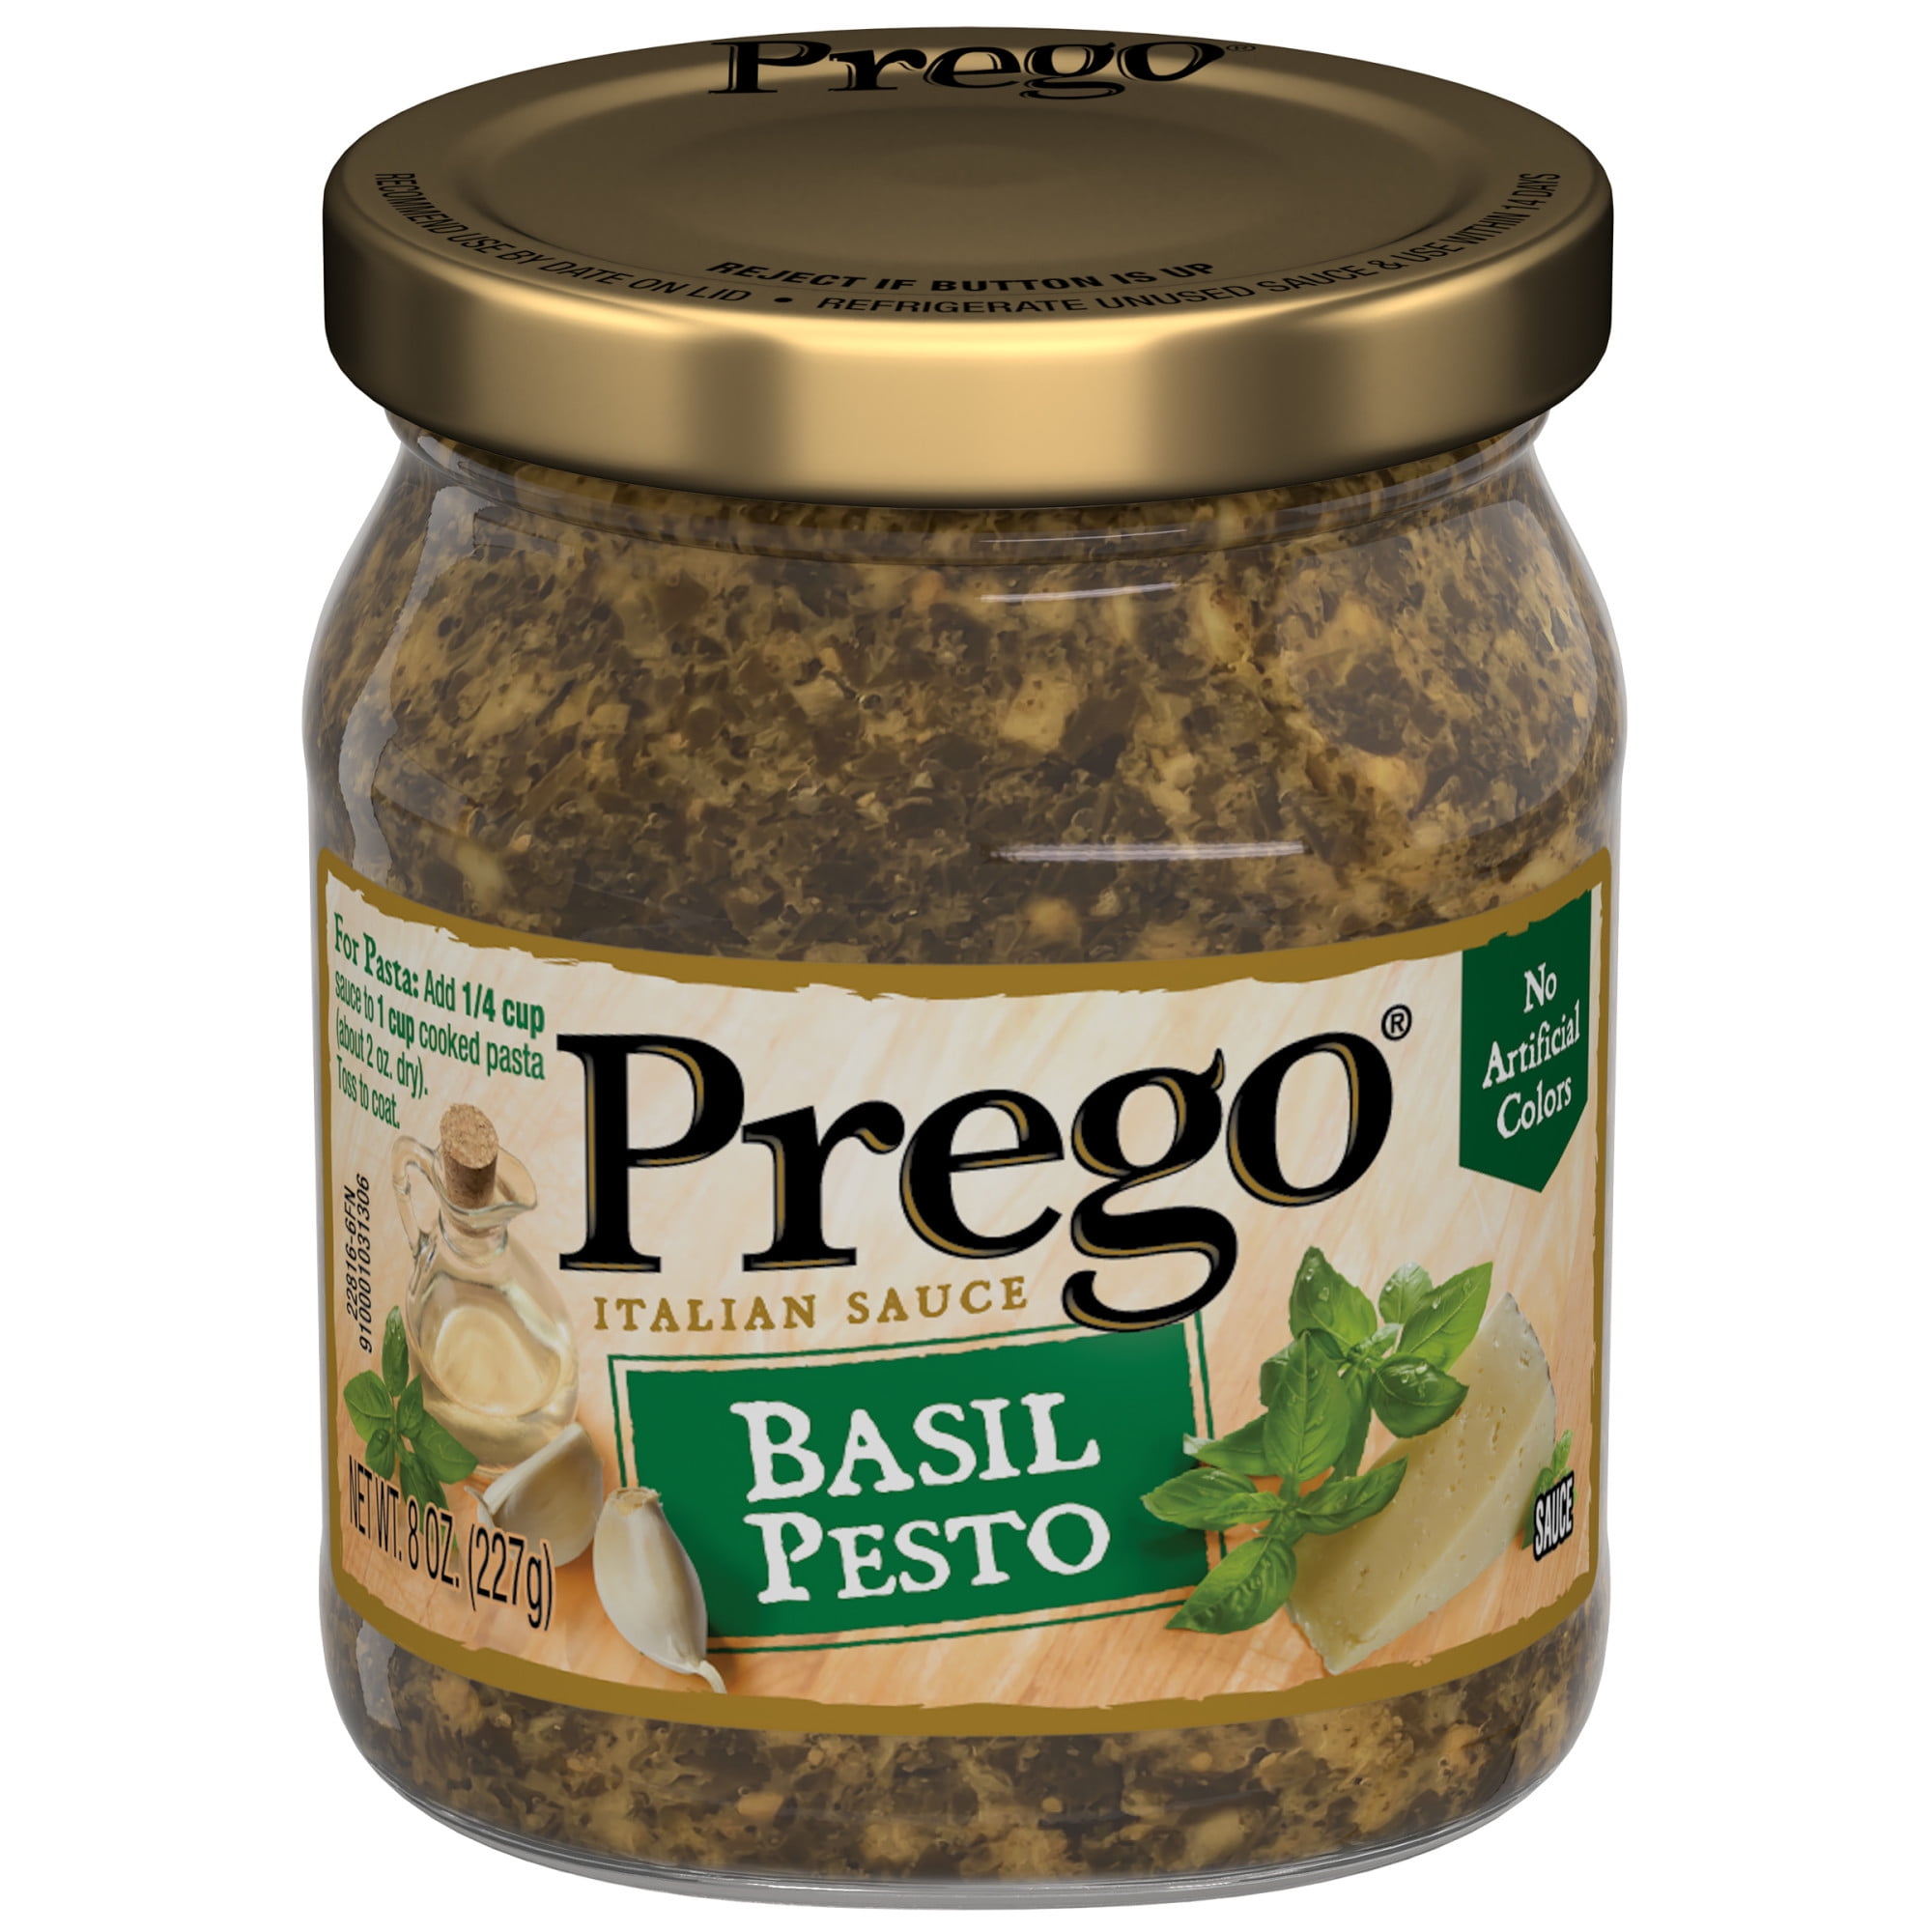 Prego Basil Pesto Sauce, 8 Oz Jar